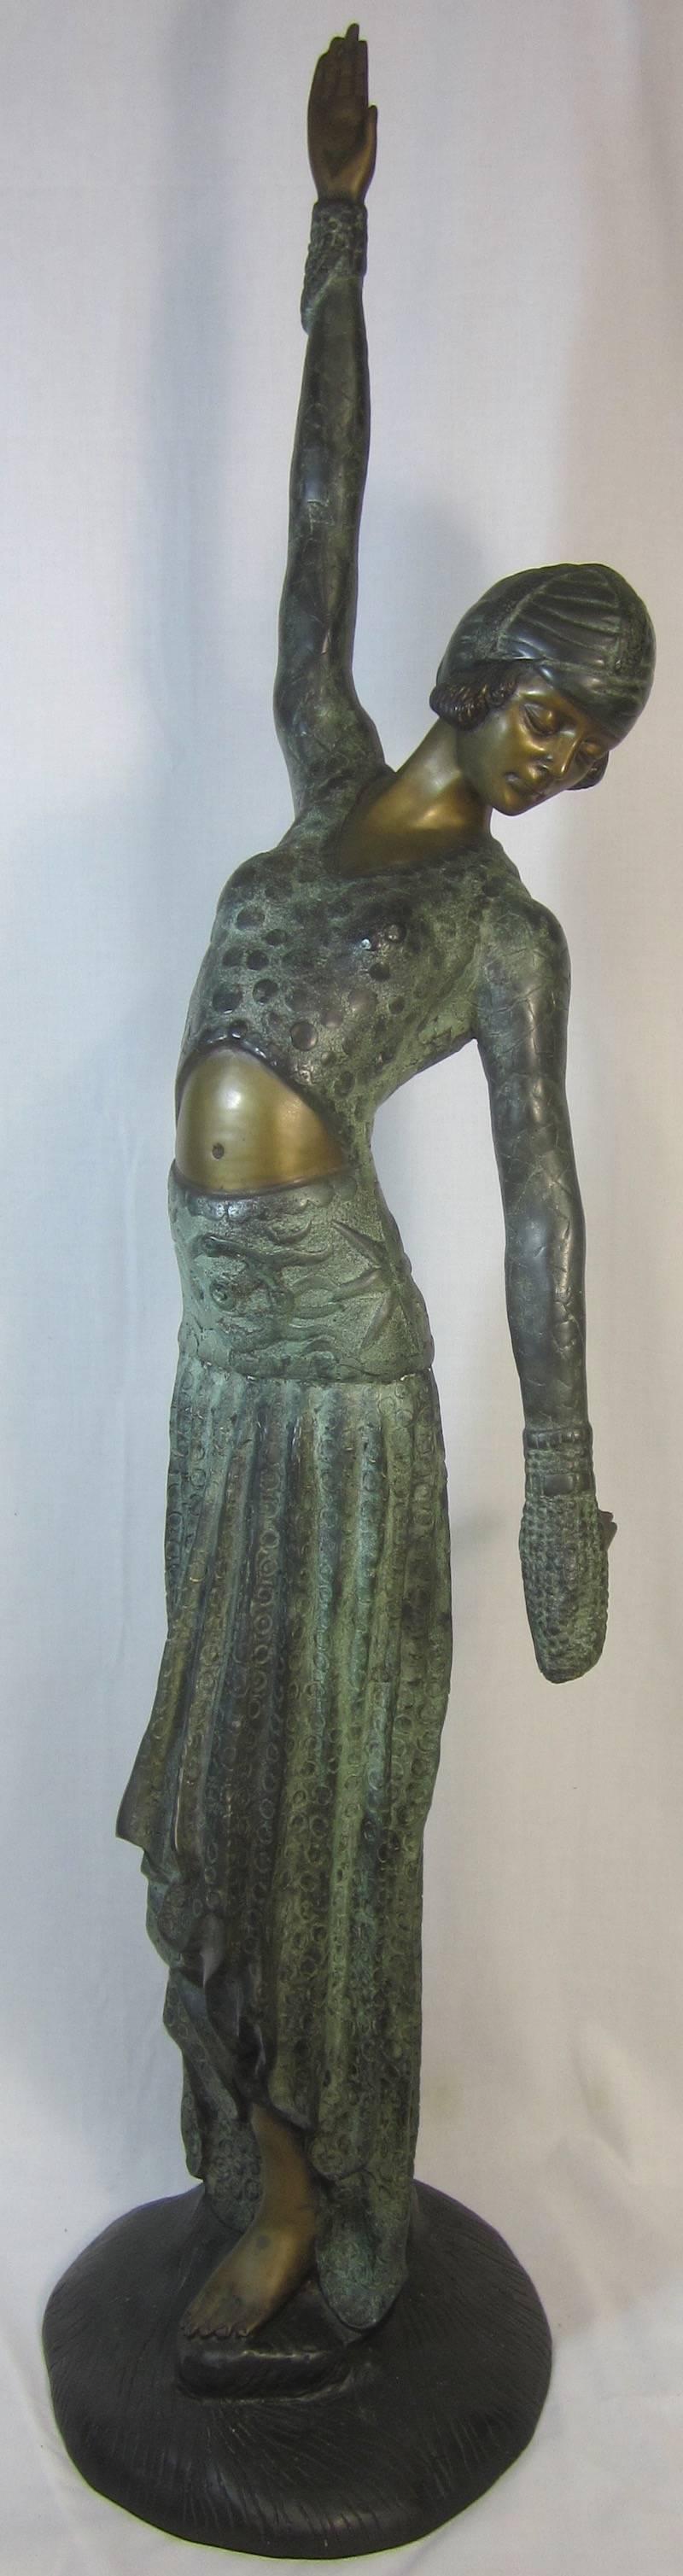 Large Art Deco bronze figure, 
No signature.
Weighs: 20kg.